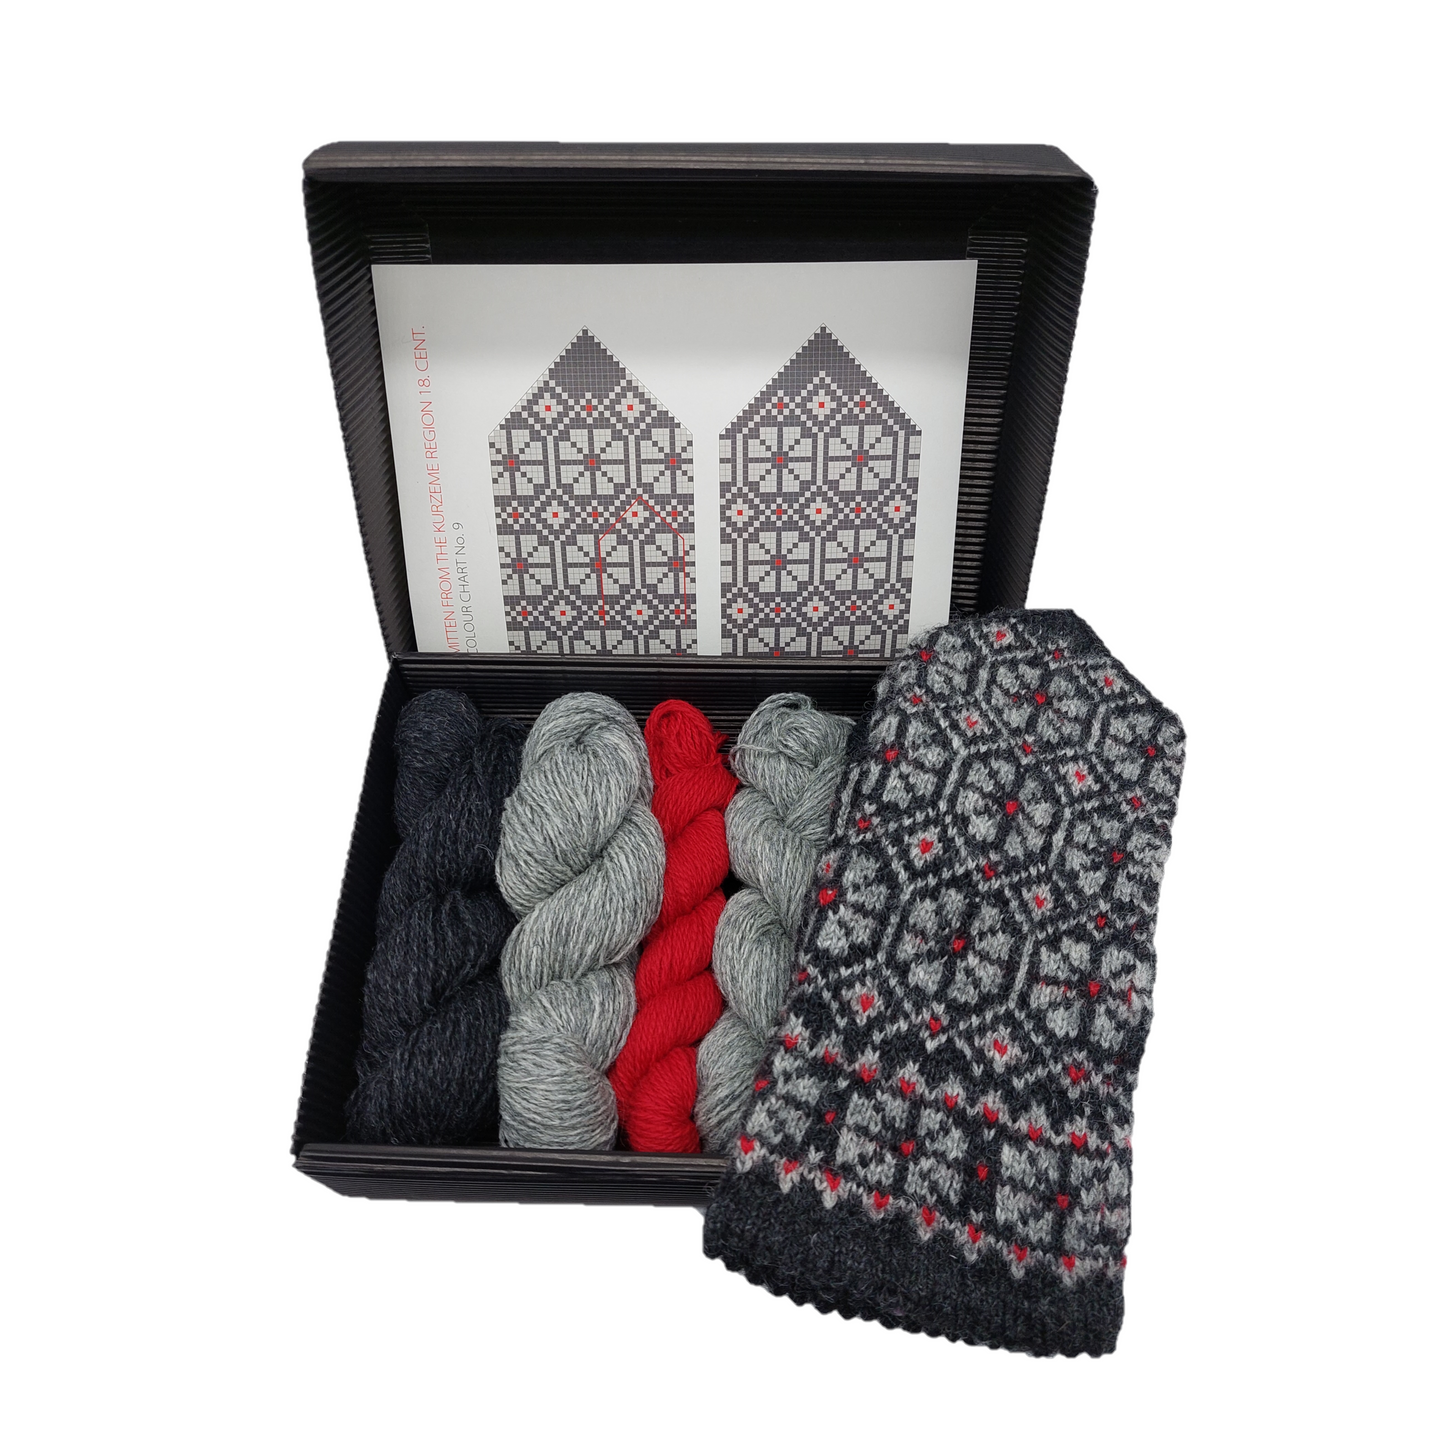 Knitting kit "Kurzeme 9"